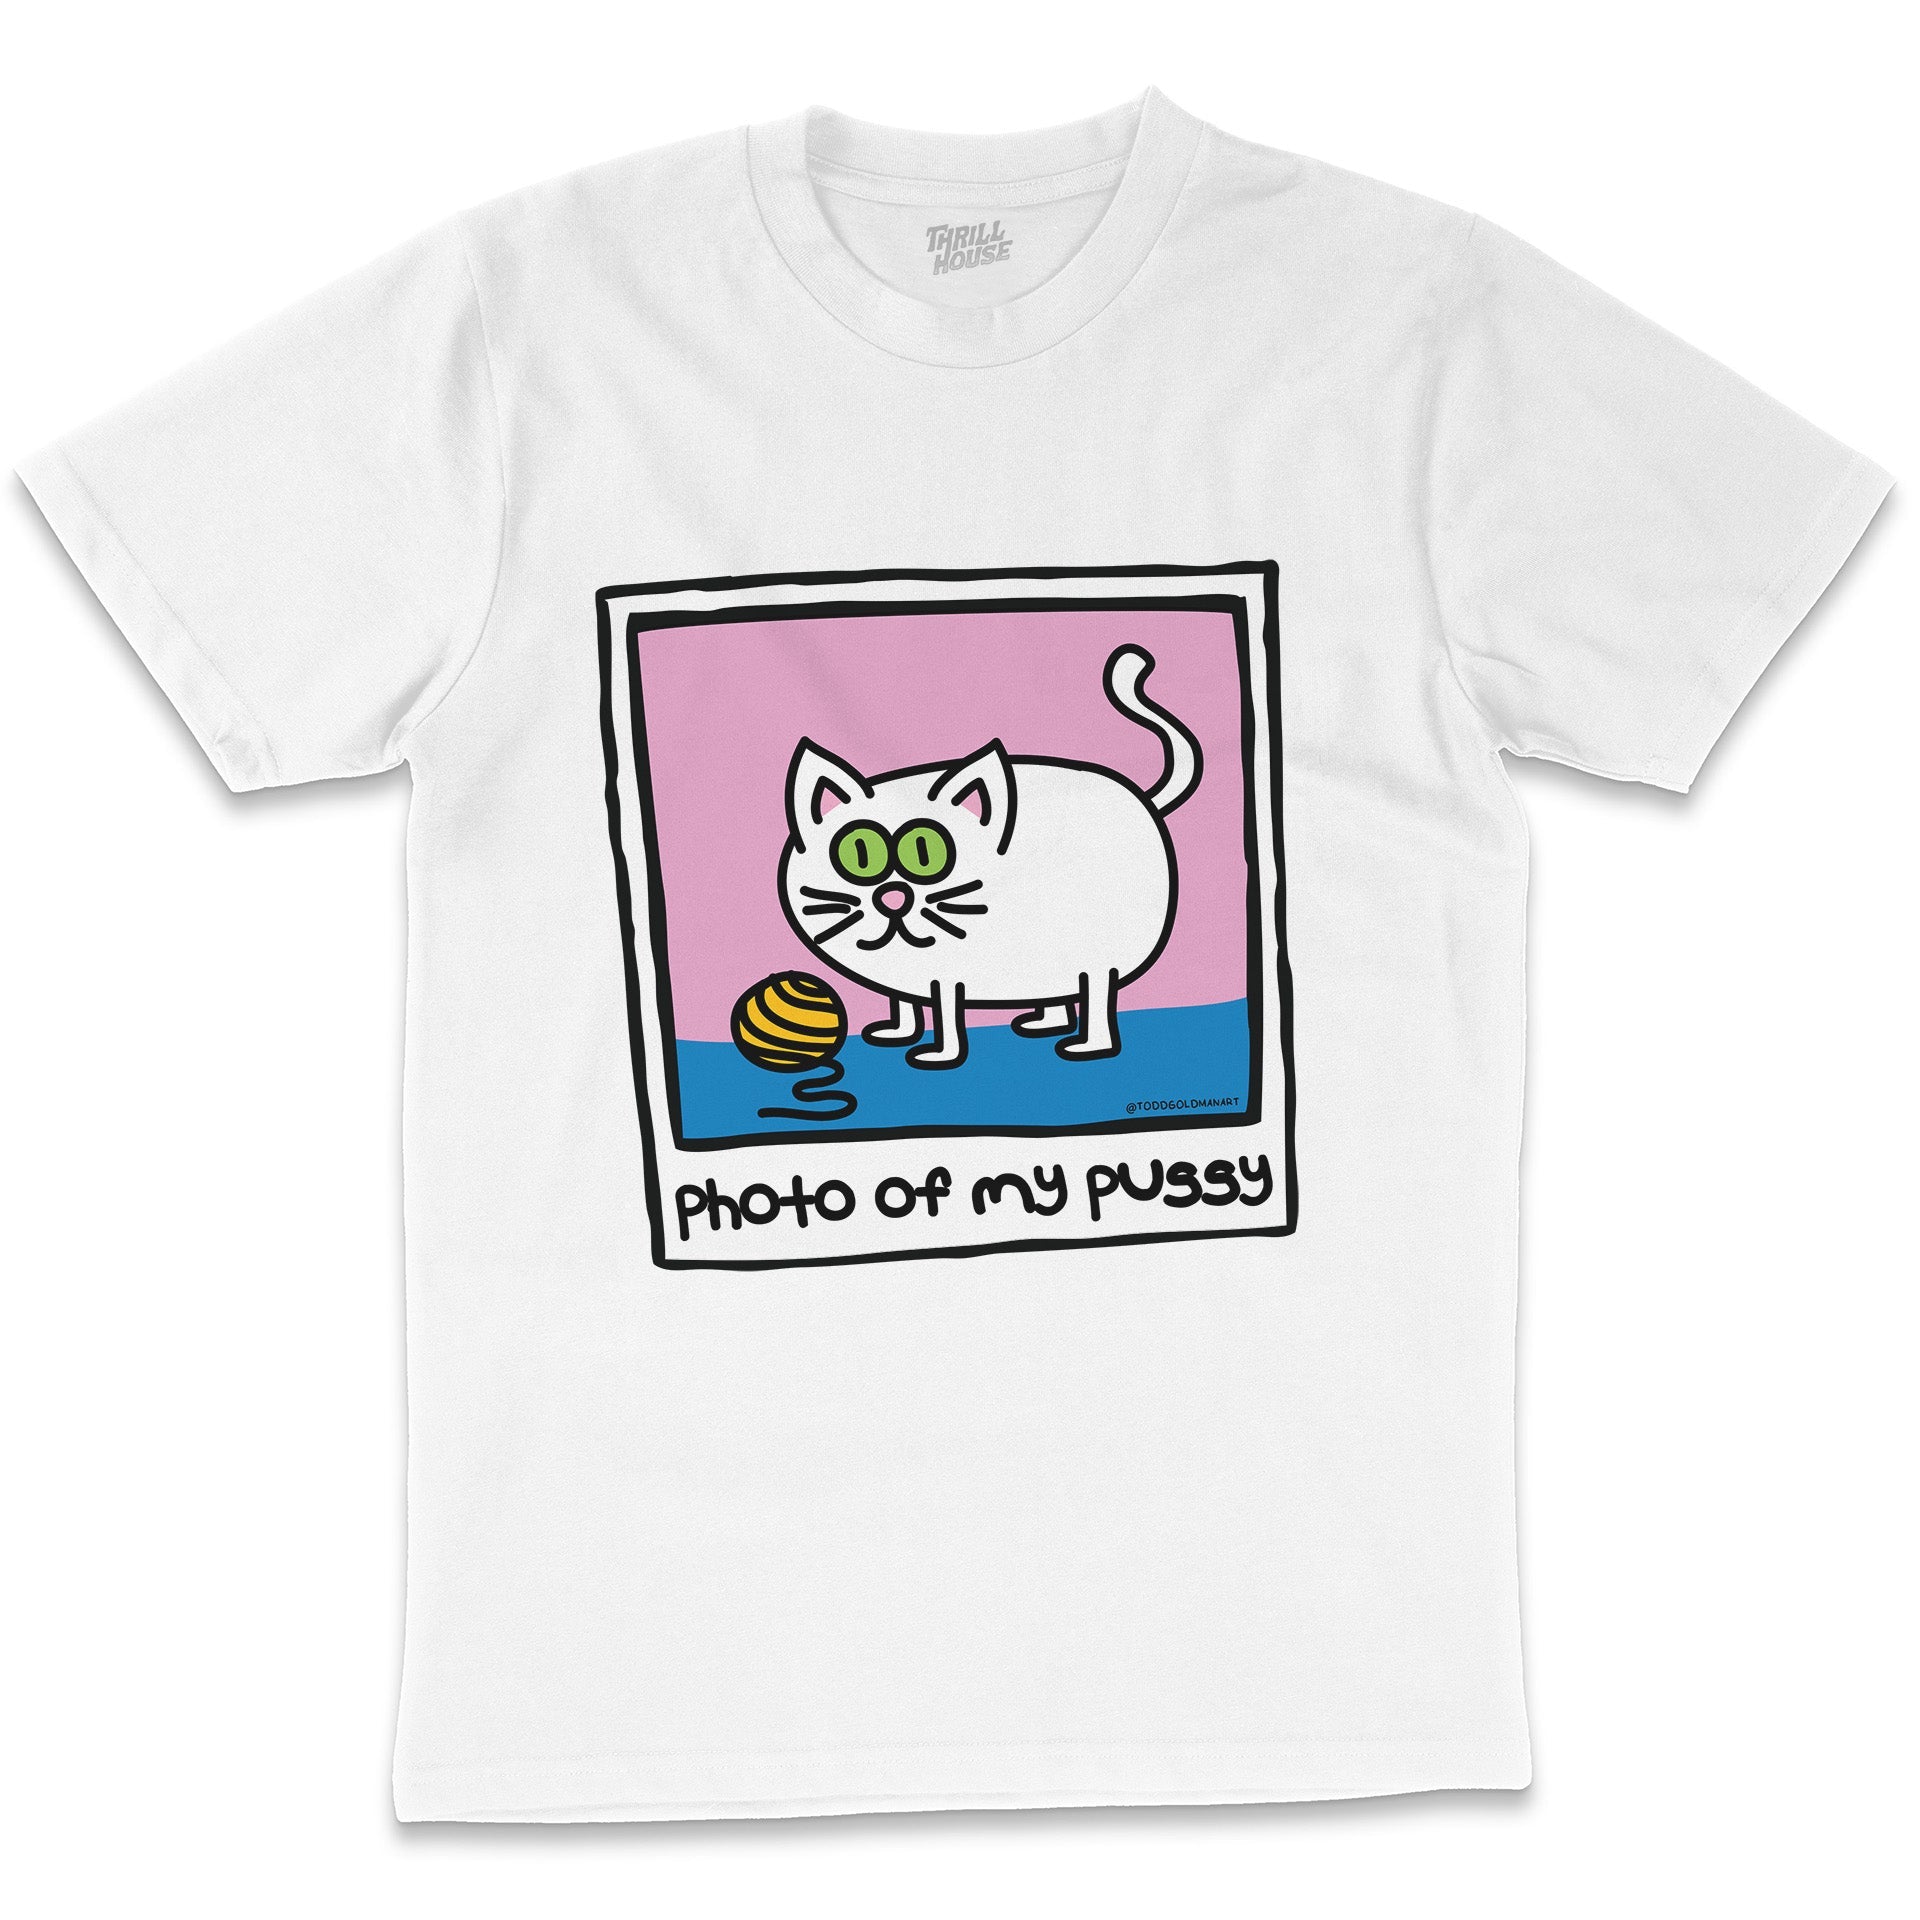 Photo of My Pussy Funny Rude Bad Pun Dad Joke Crude Humour Cat Kitten Cotton T-Shirt